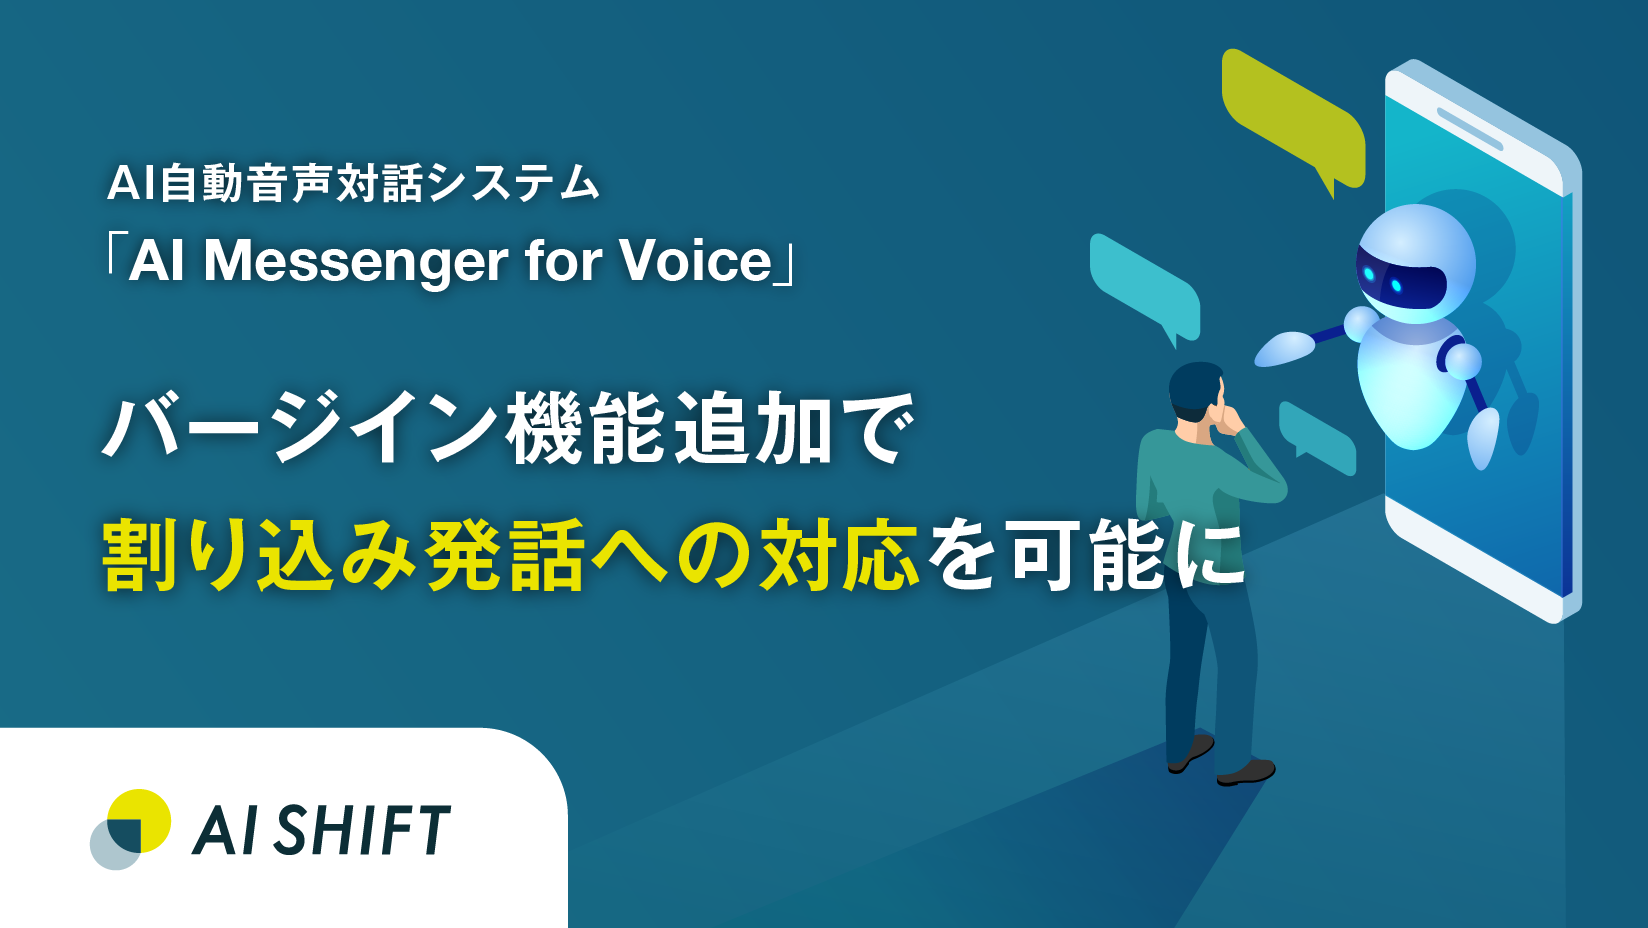 AI自動音声対話システム「AI Messenger for Voice」、バージイン機能追加で割り込み発話への対応を可能に